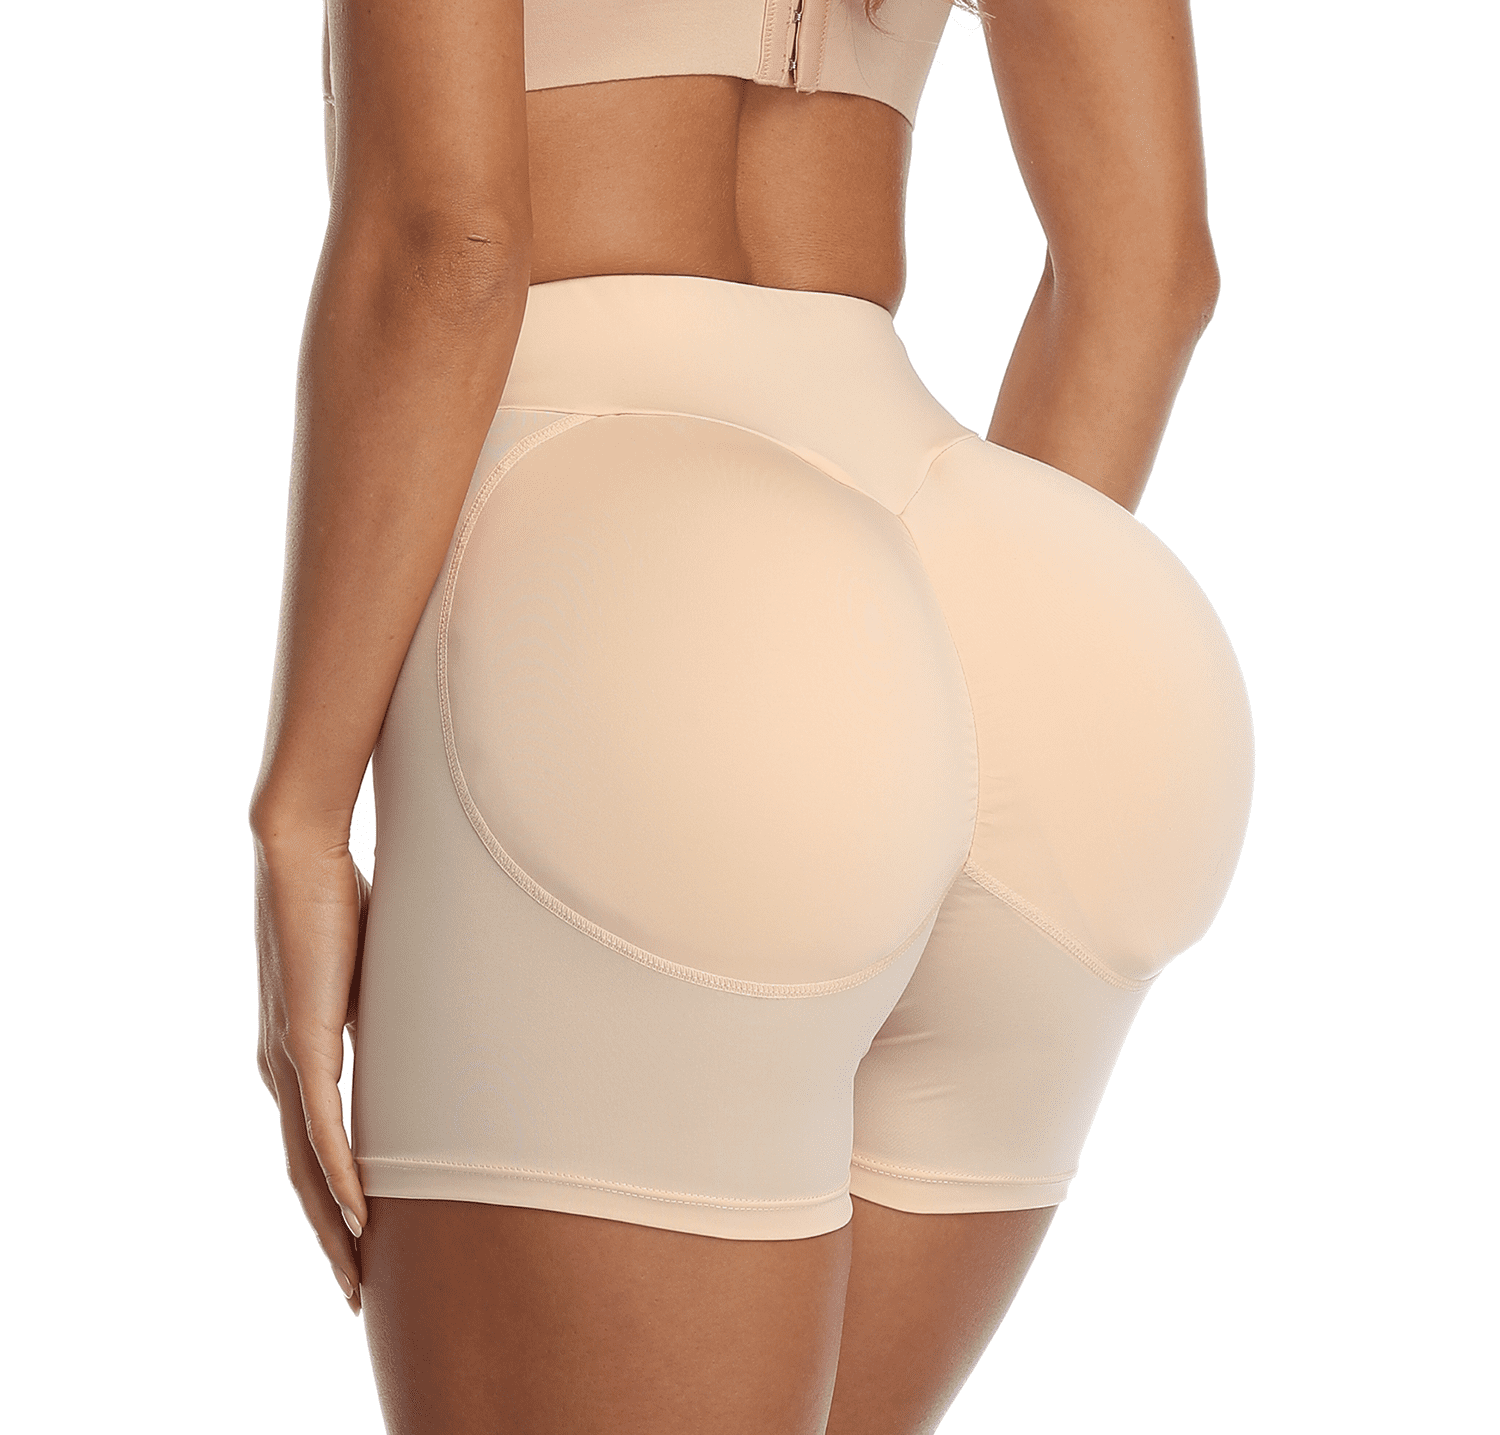 Women Panties Honeycomb Tummy Control Butt Lift Pants Fake Butt Sponge Pad, Shop Today. Get it Tomorrow!